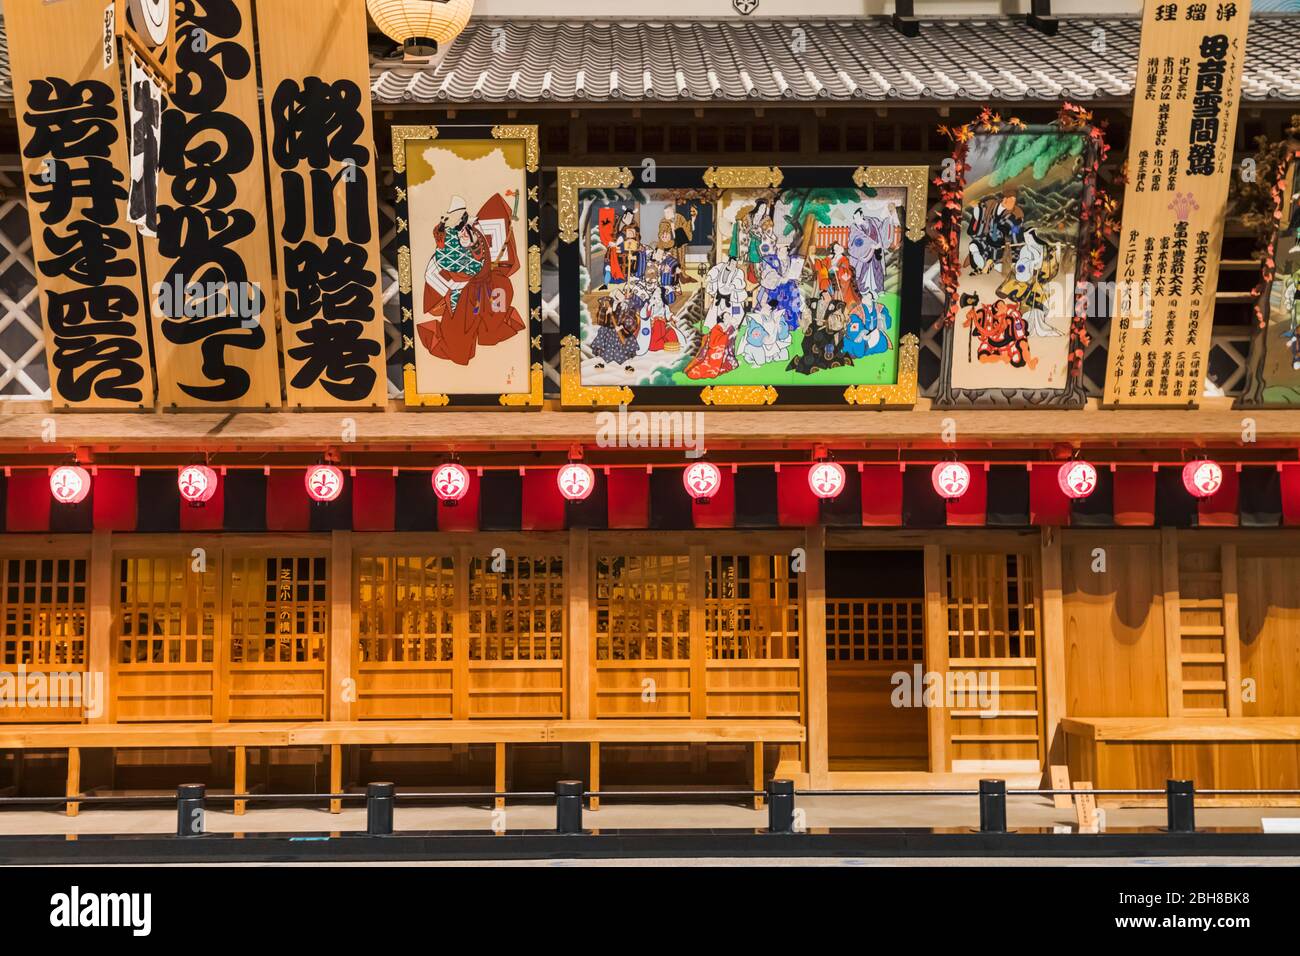 Japon, Honshu, Tokyo, Ryogoku, Musée métropolitain de Tokyo Edo-Tokyo, façade de réplique du théâtre Nakamura-za Kabuki Banque D'Images